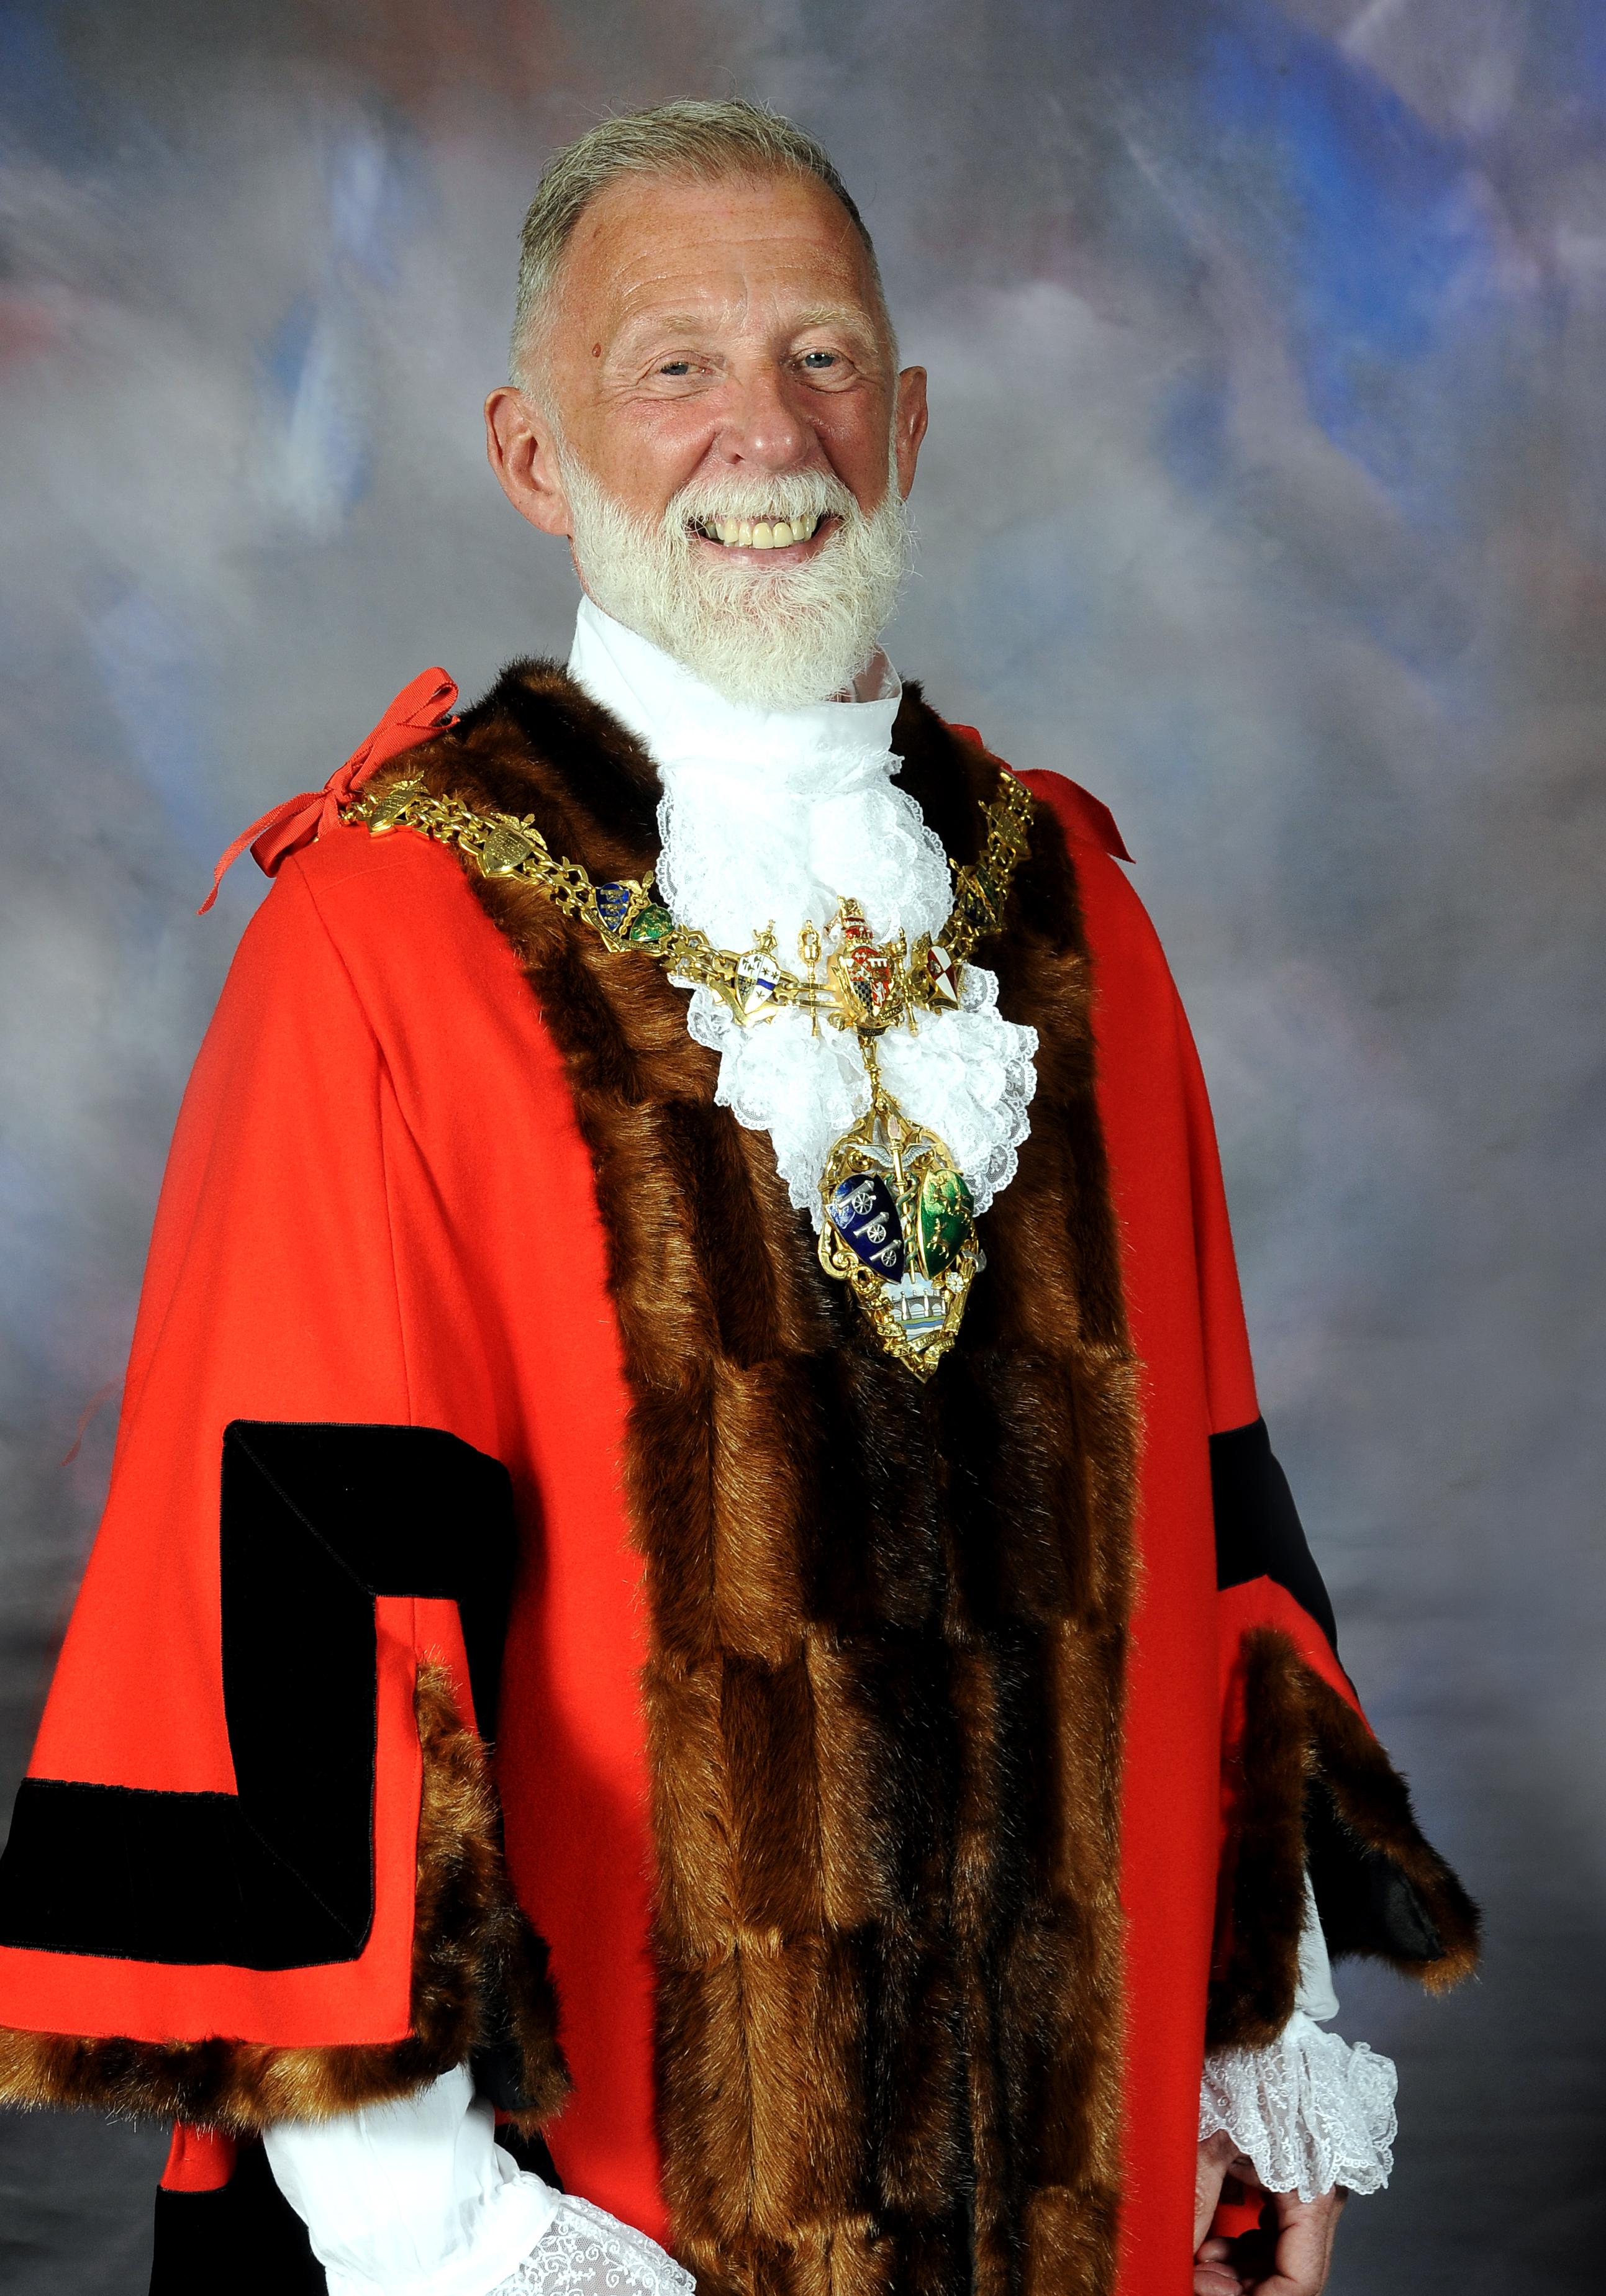 The Mayor of Rotherham, Councillor Robert Taylor